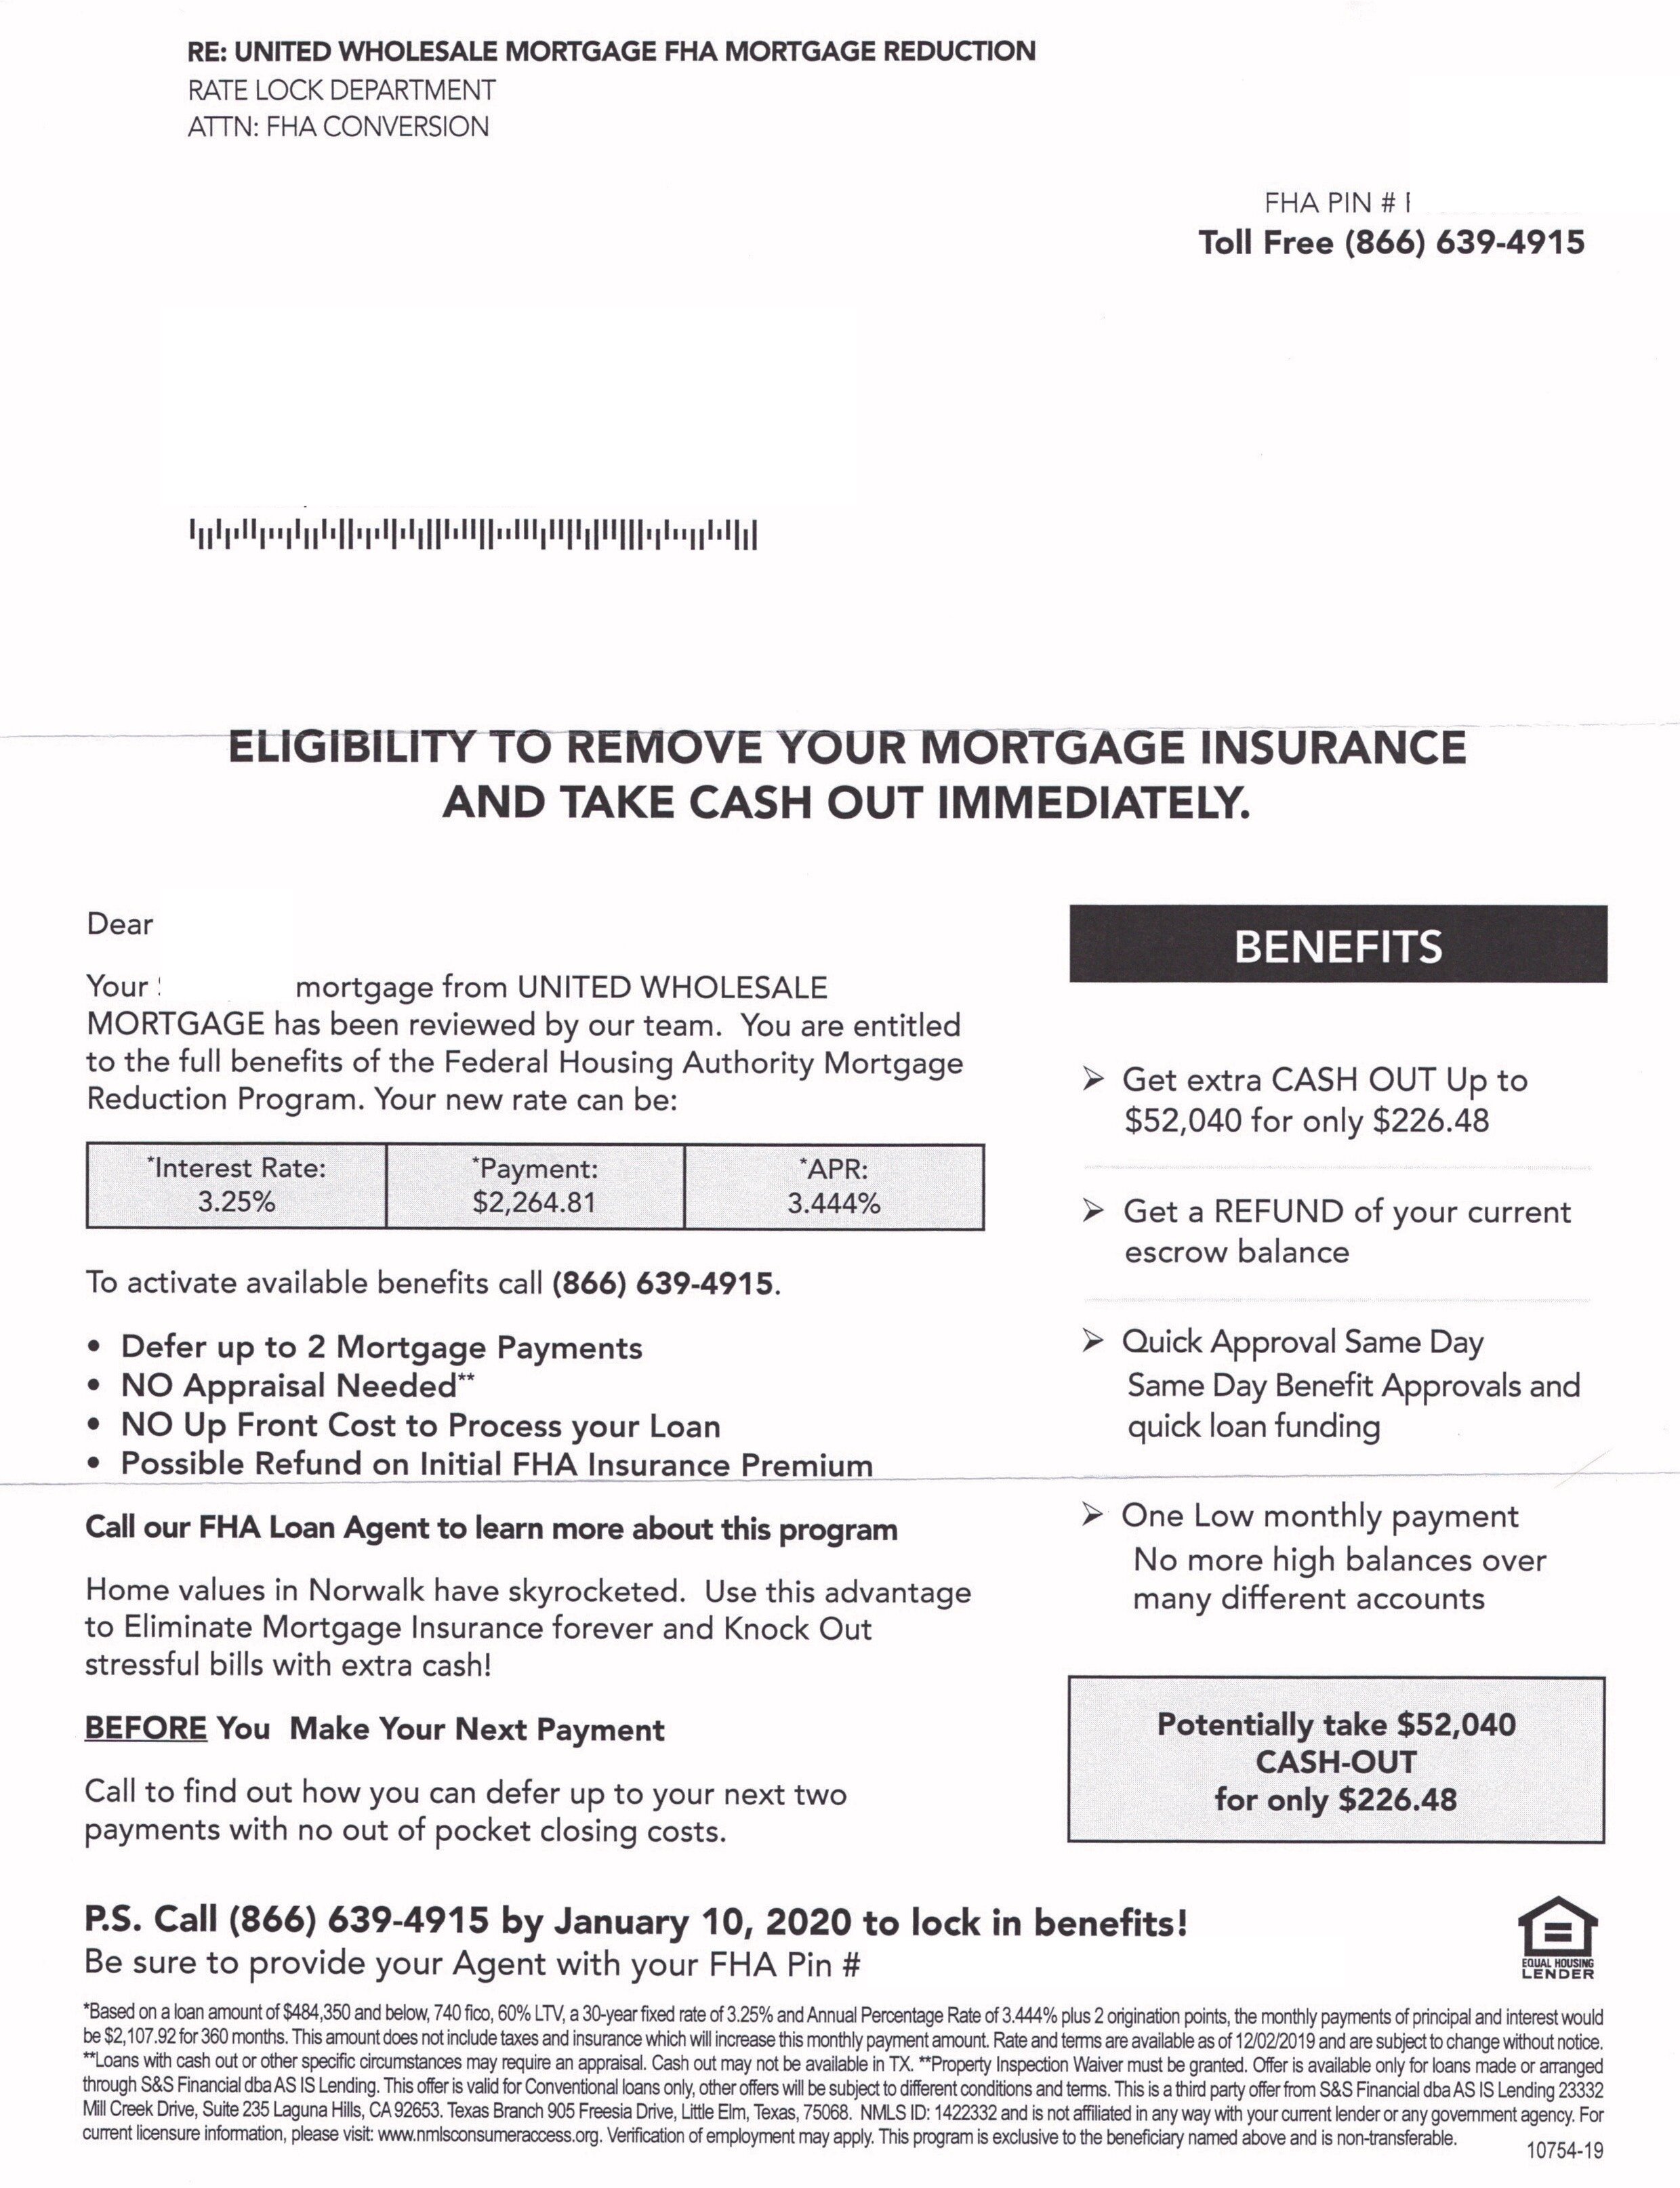 FHA Mortgage Insurance Mailers.jpg